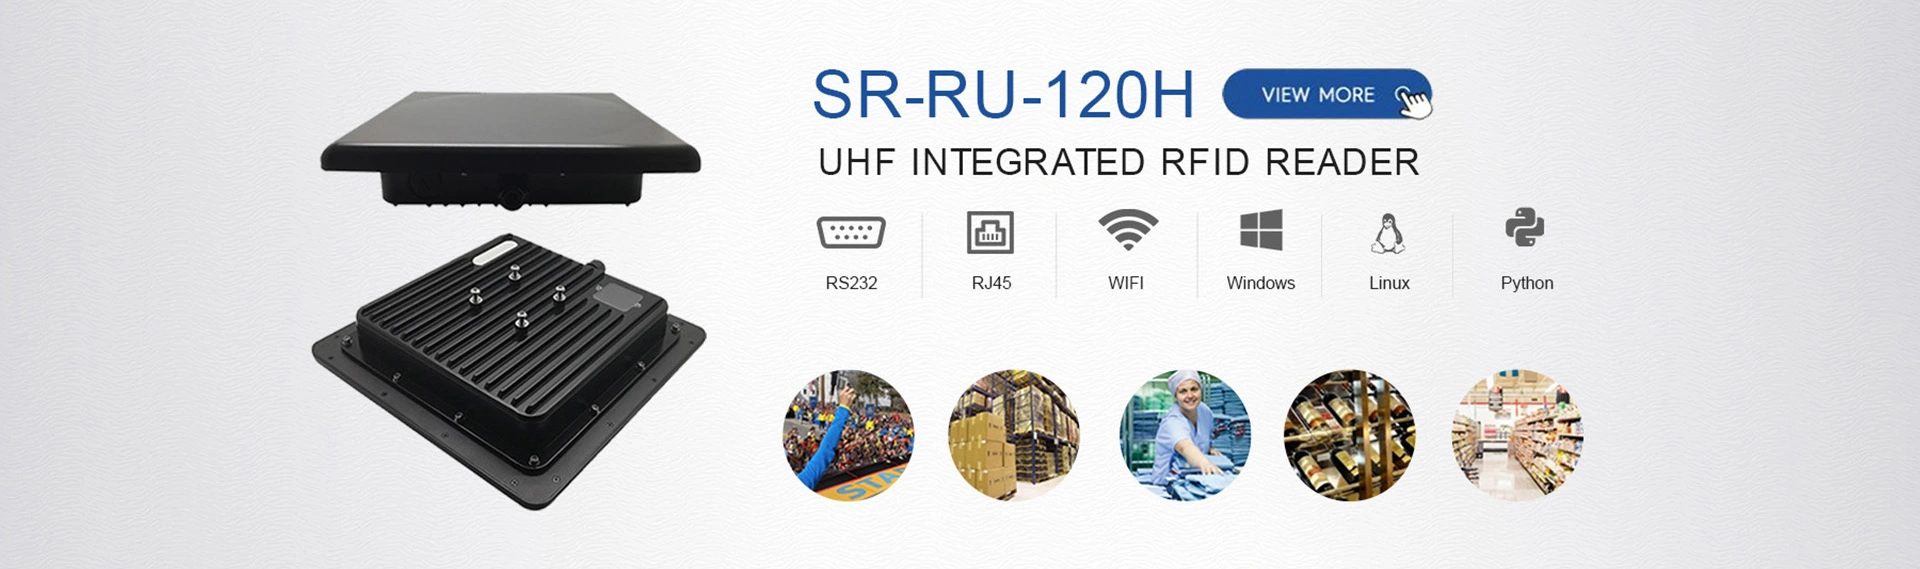 UHF RFID INTEGRATED READER